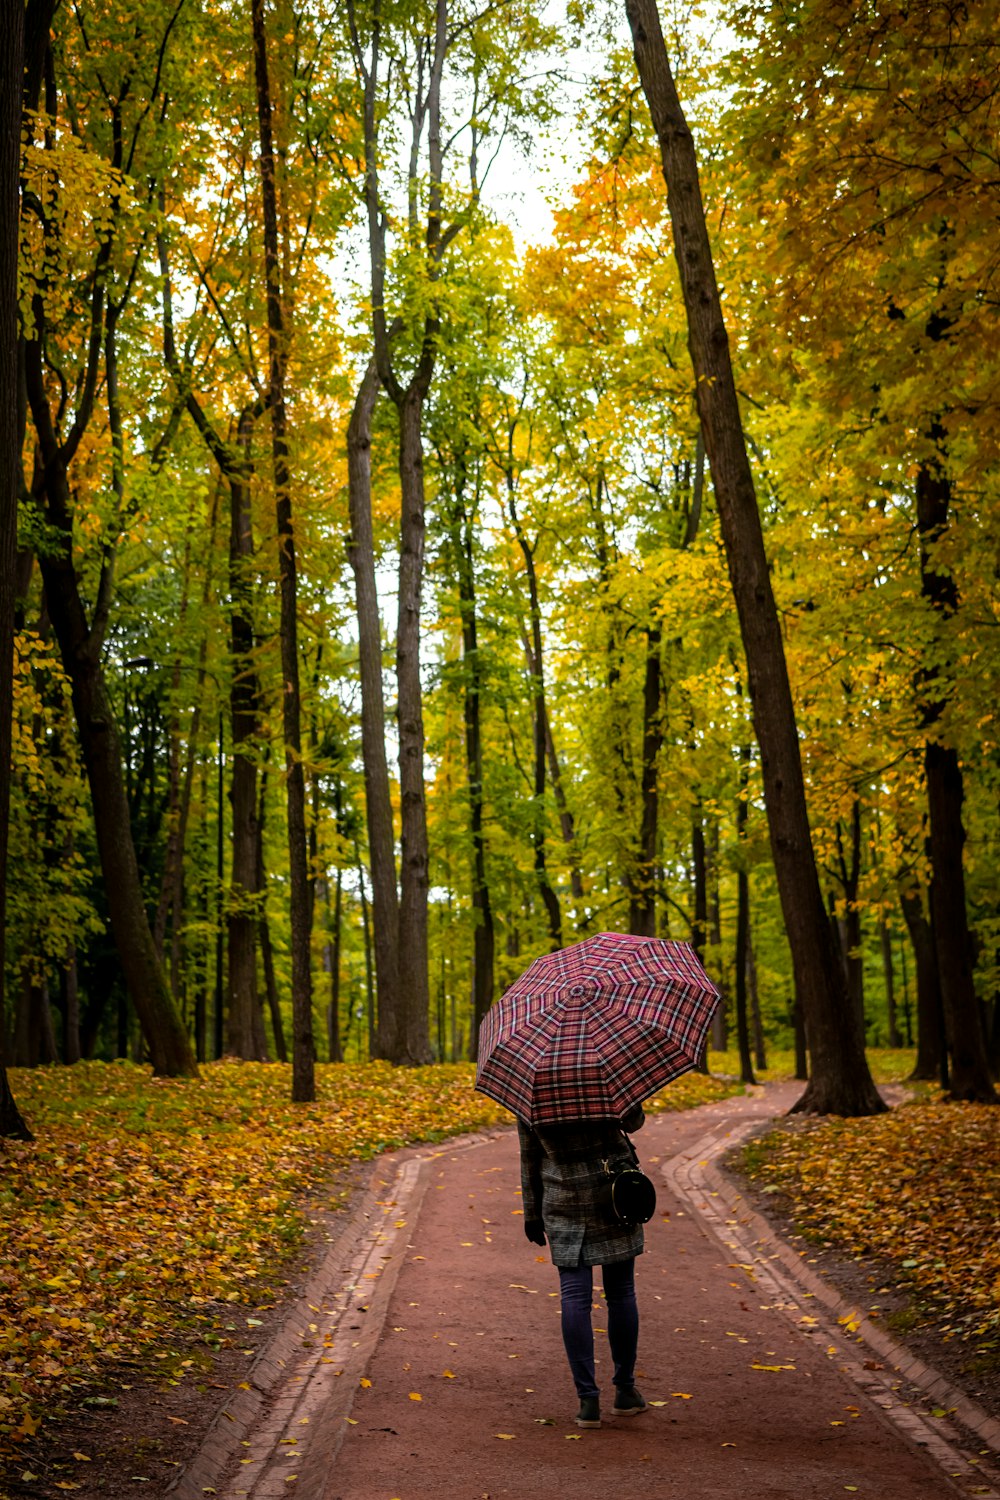 a person walking down a path with an umbrella